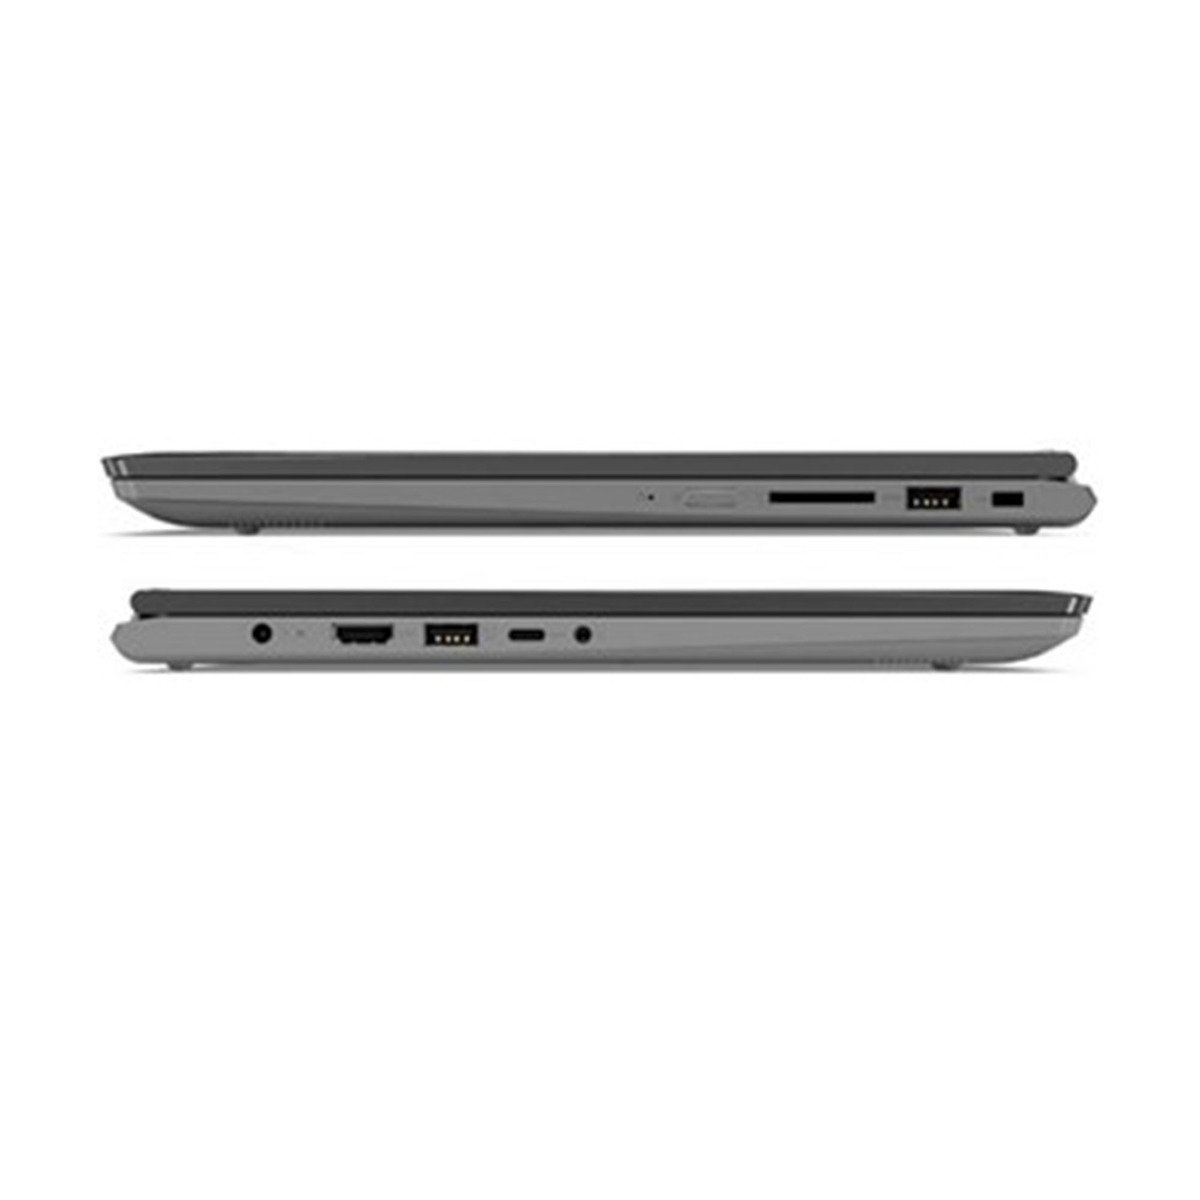 Lenovo  2 in 1 Notebook Yoga 530-81EK0154AX Core i5 Blue